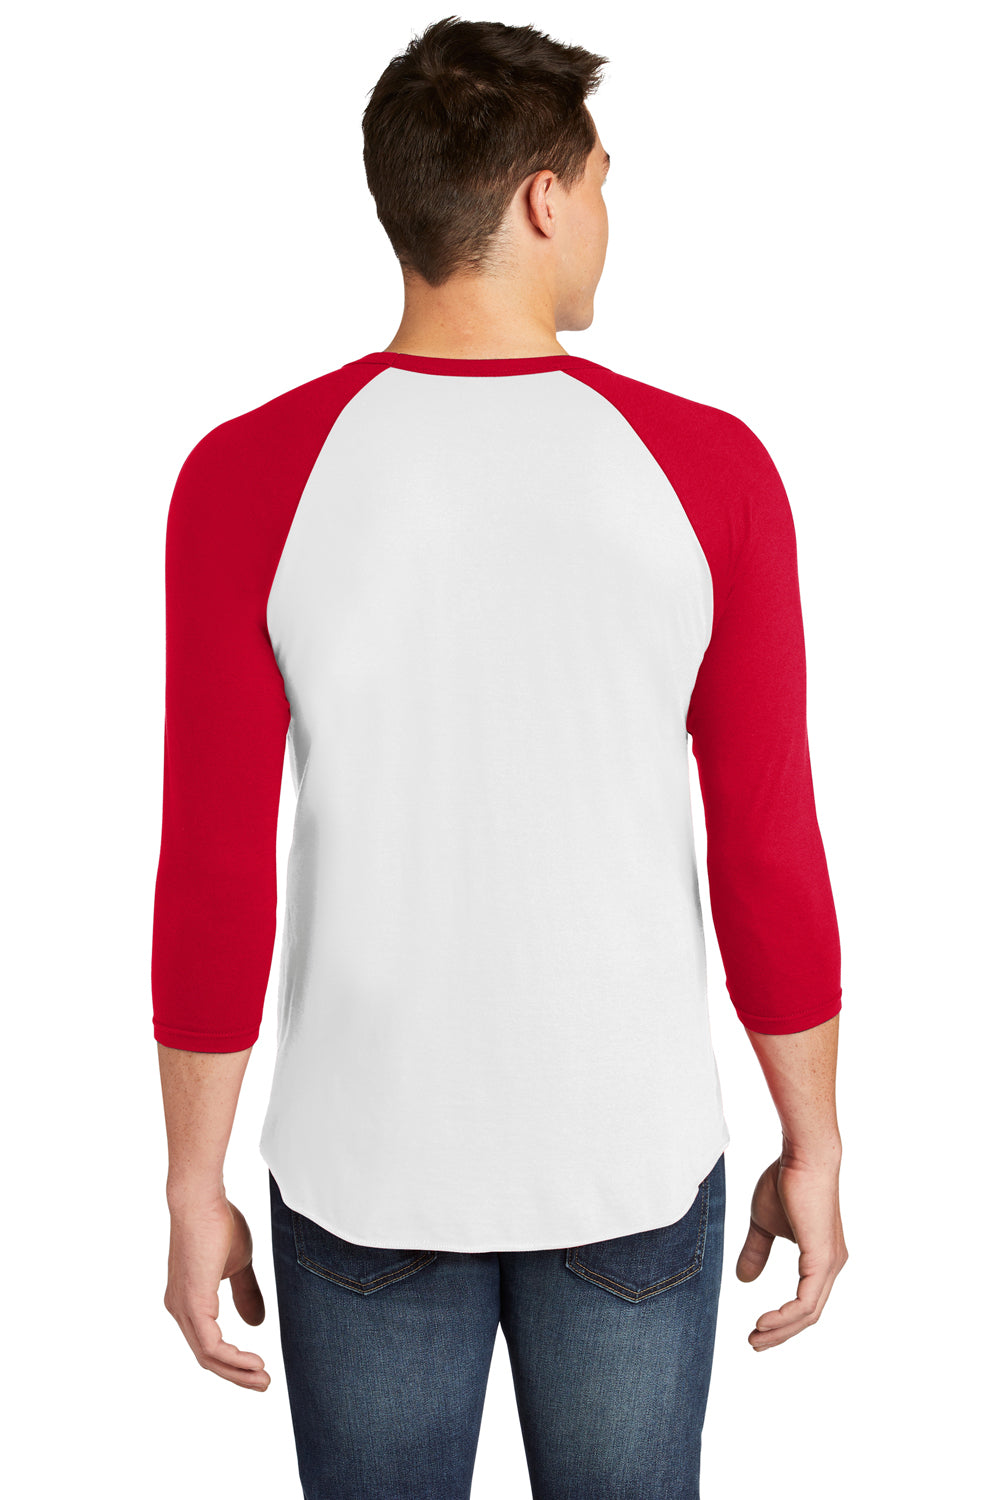 American Apparel BB453W Mens 3/4 Sleeve Crewneck T-Shirt White/Red Back